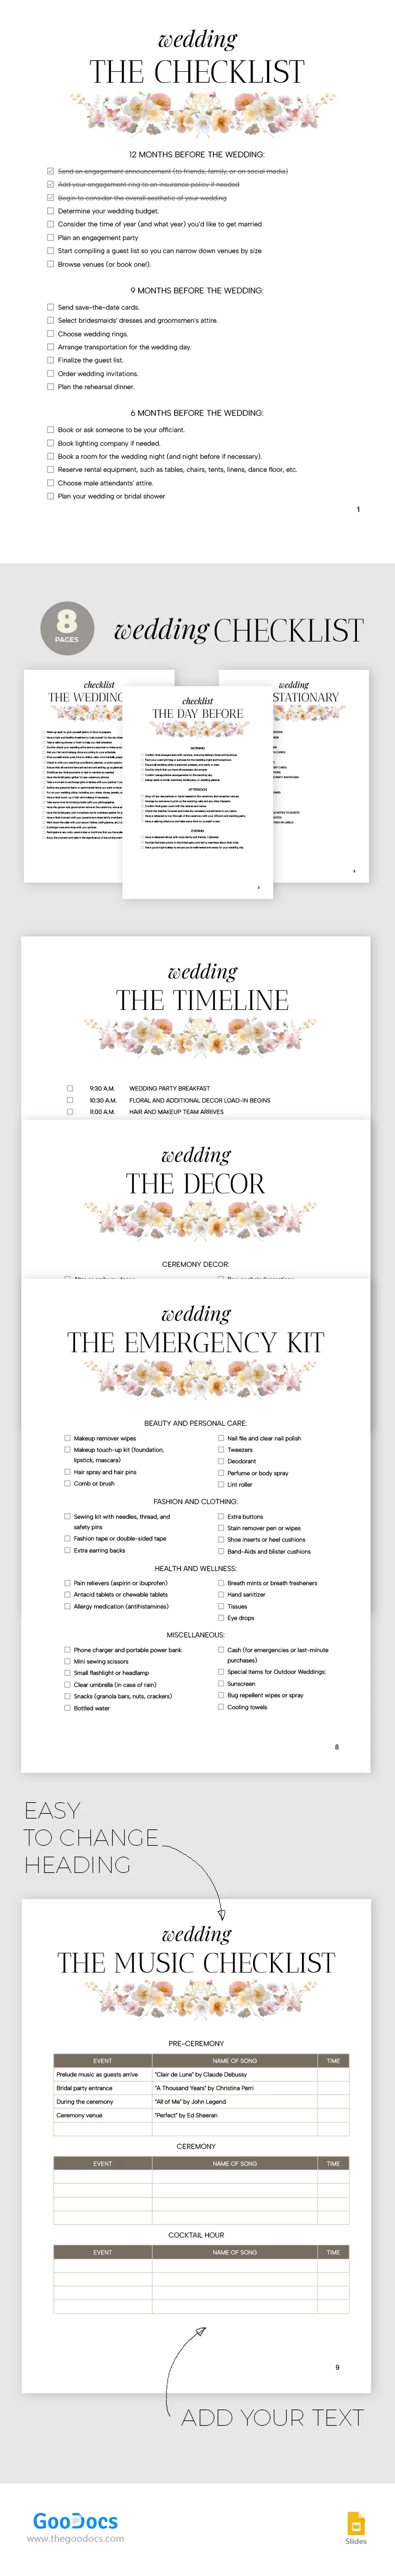 Hochzeits-Checkliste - free Google Docs Template - 10068478